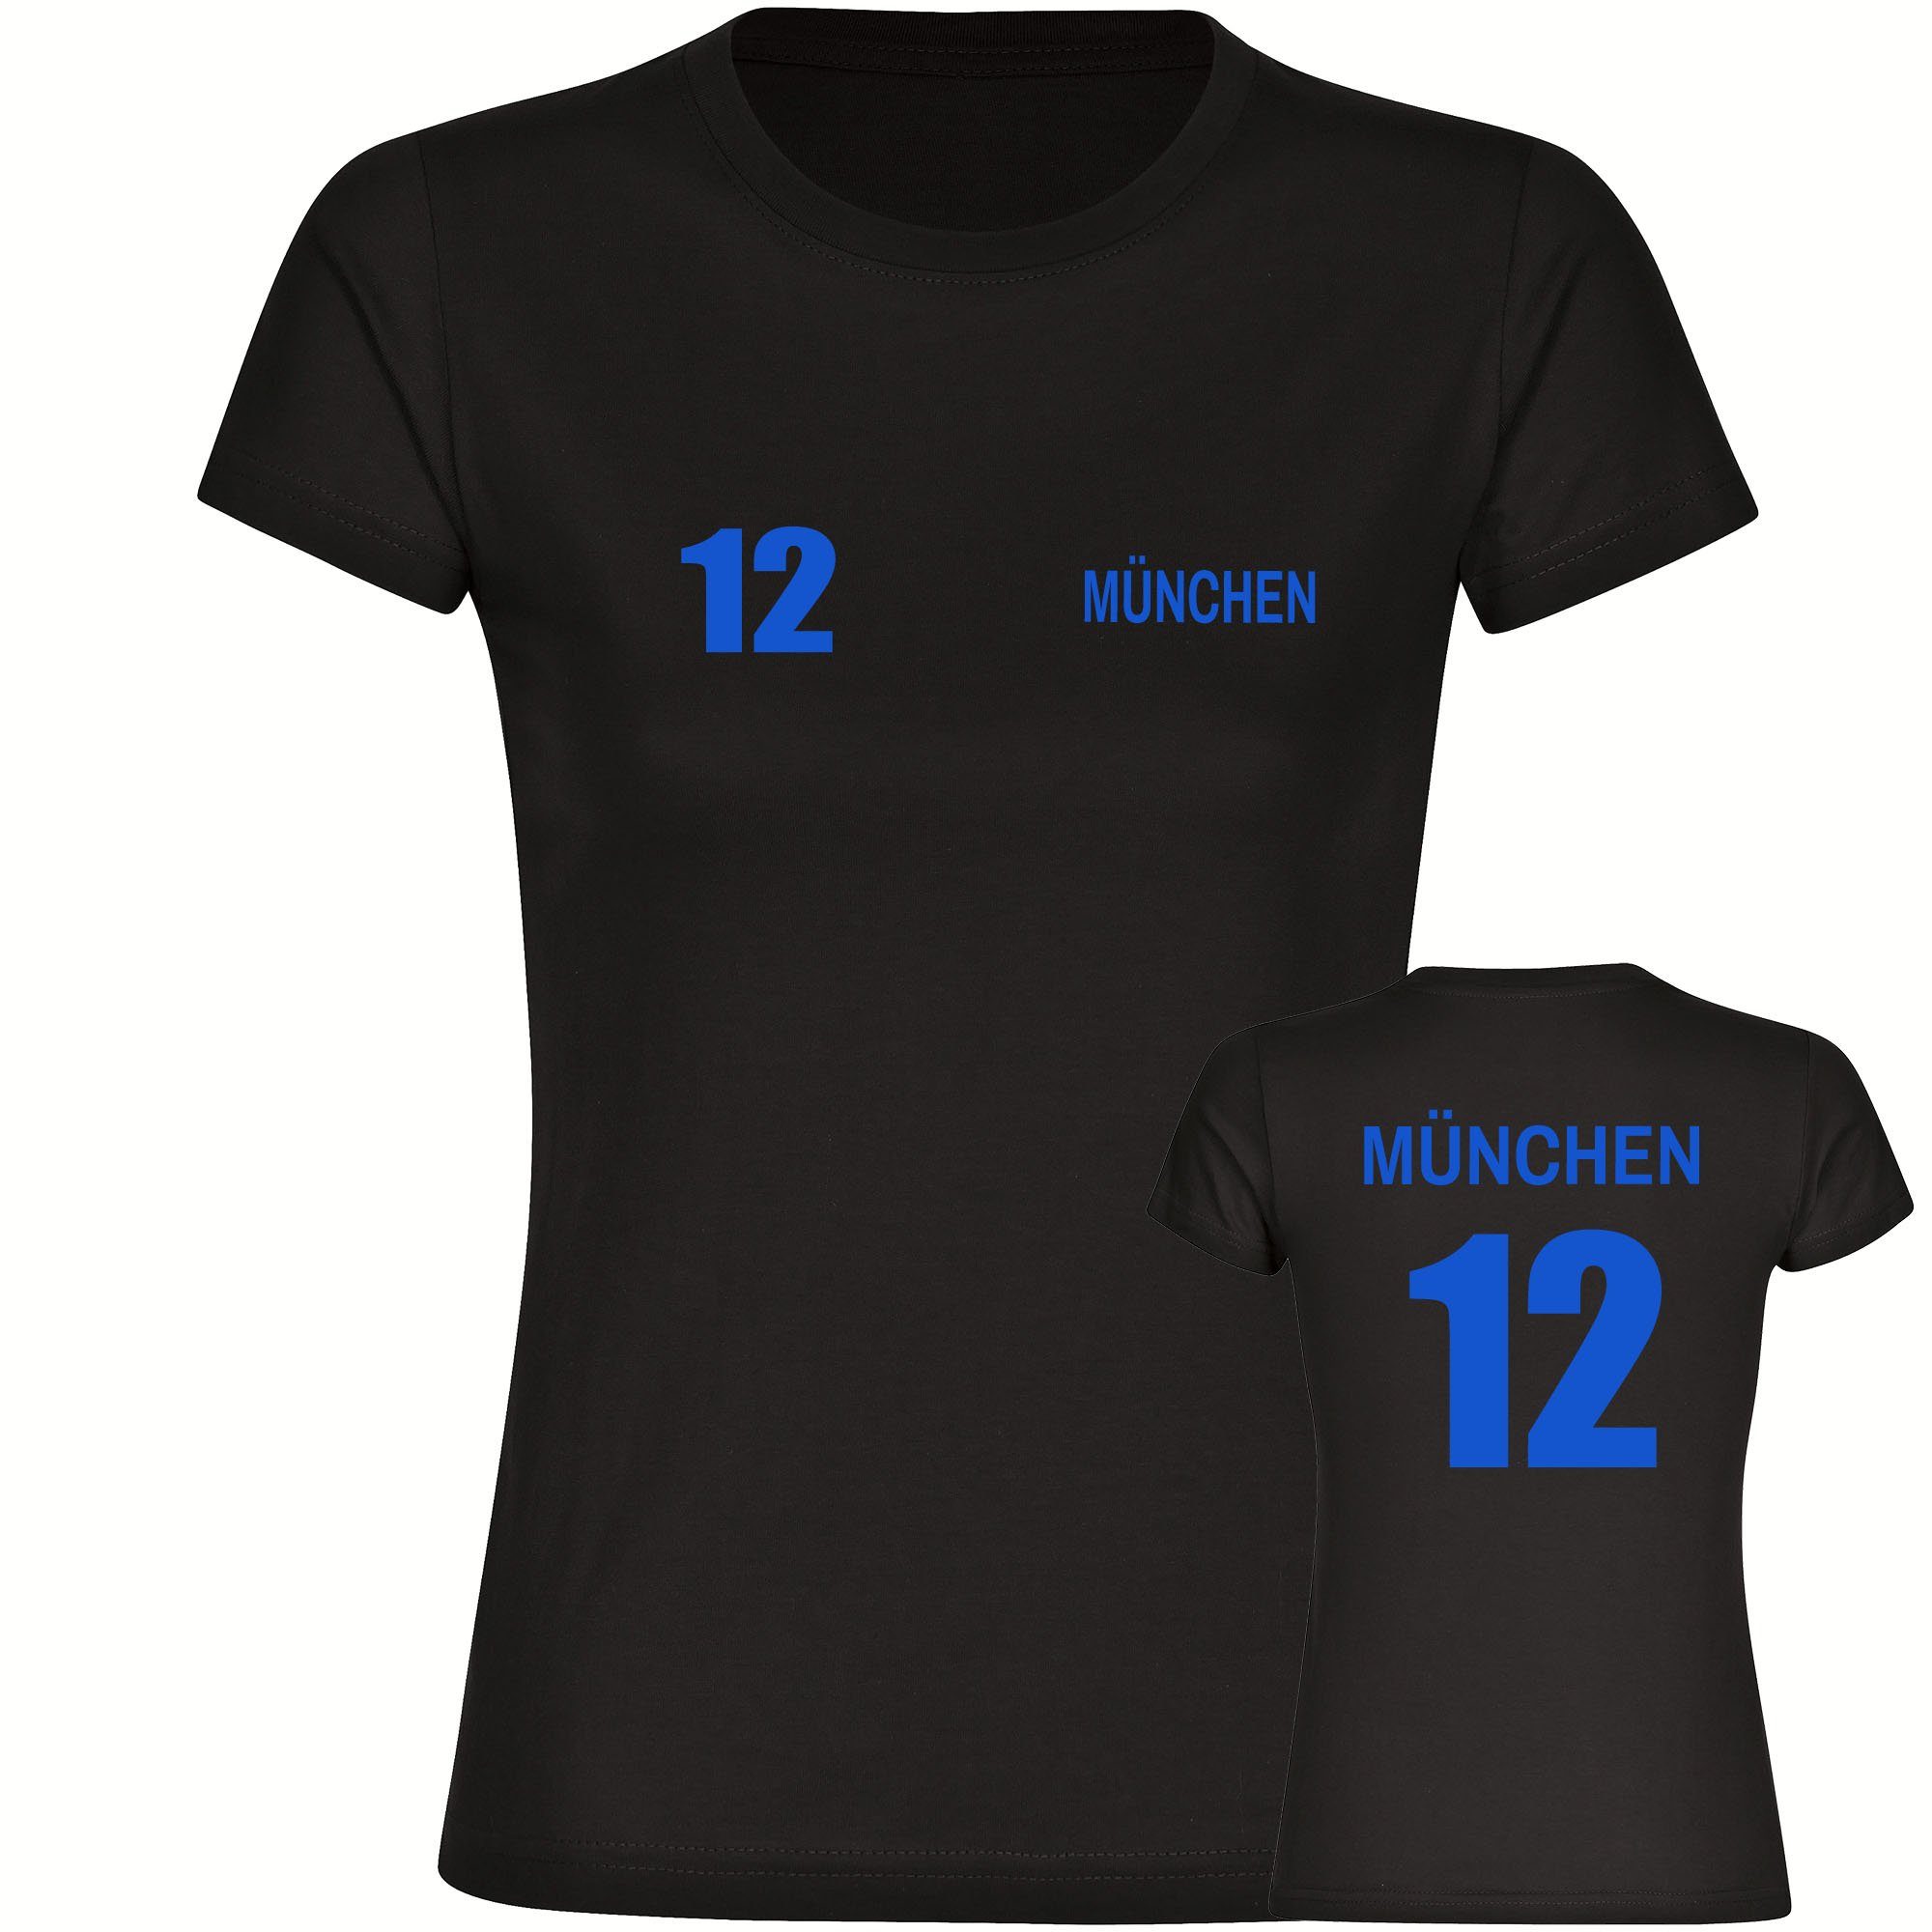 multifanshop T-Shirt Damen München blau - Trikot 12 - Frauen